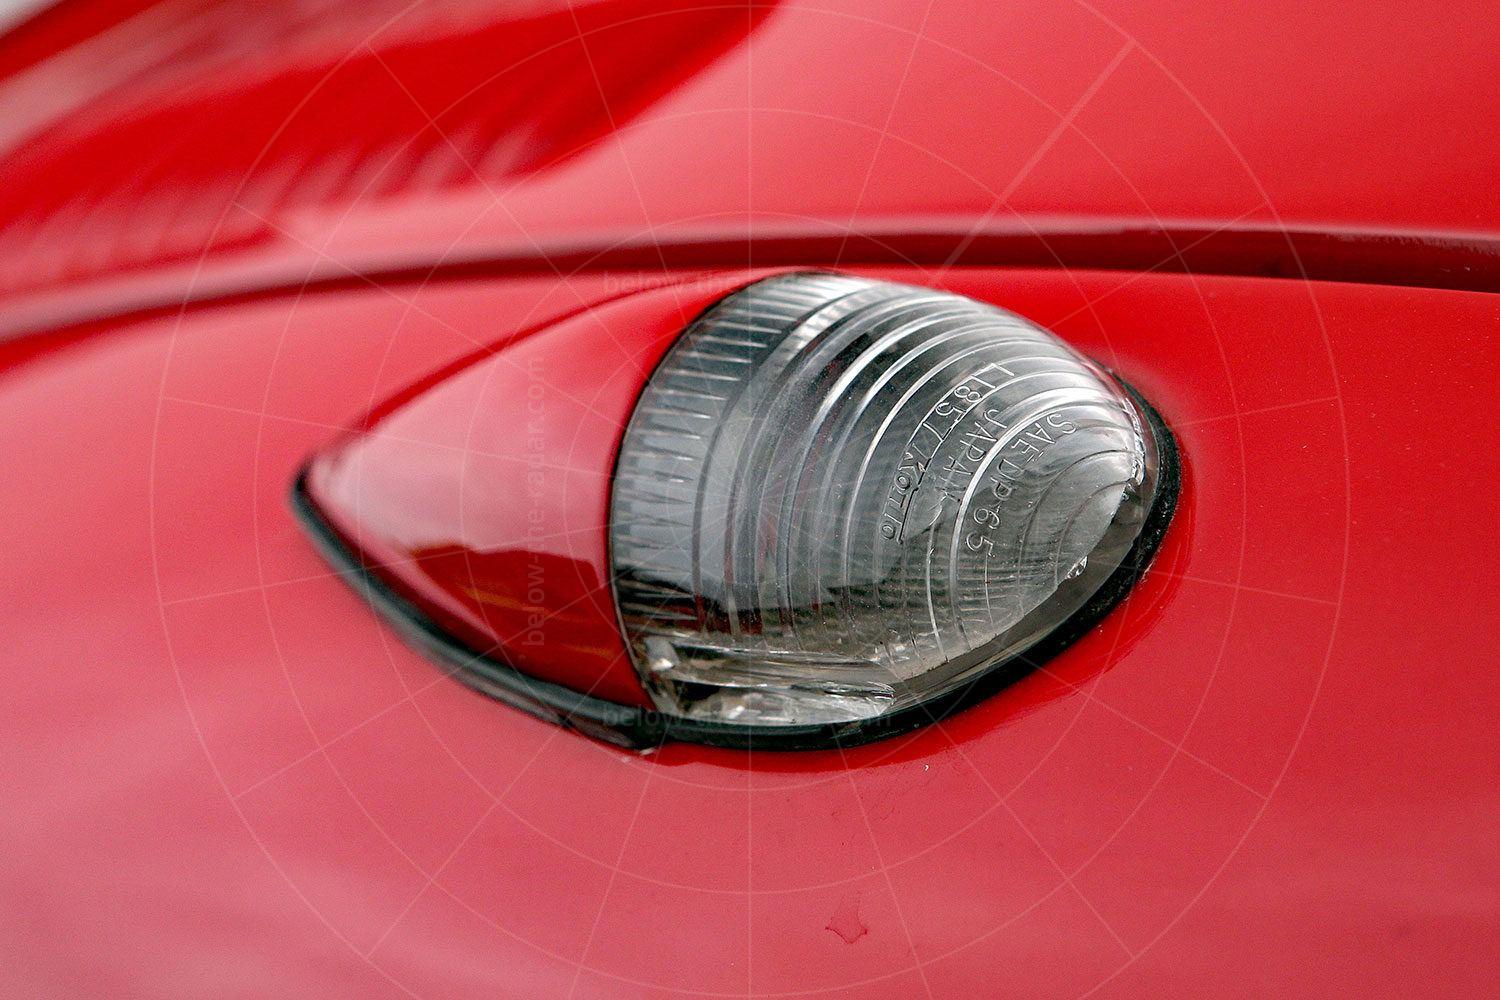 Toyota Sports 800 parking light Pic: magiccarpics.co.uk | Toyota Sports 800 parking light